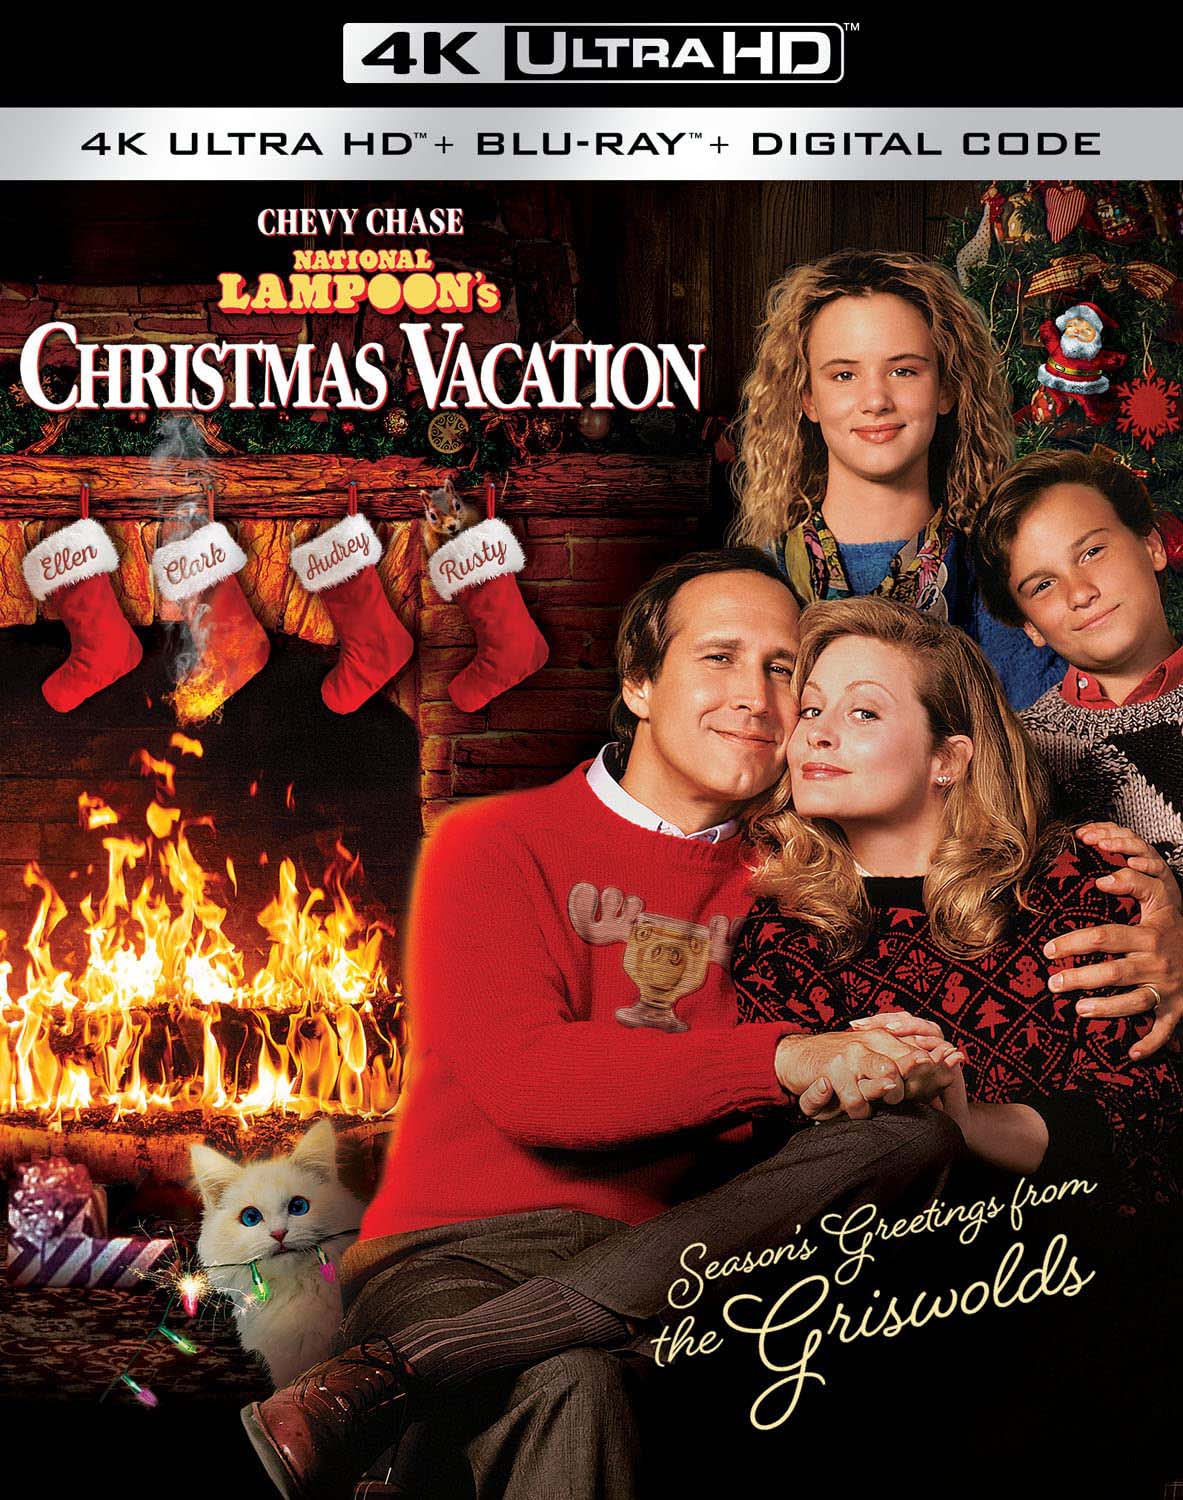 National Lampoons Christmas Vacation 4k Blu-ray